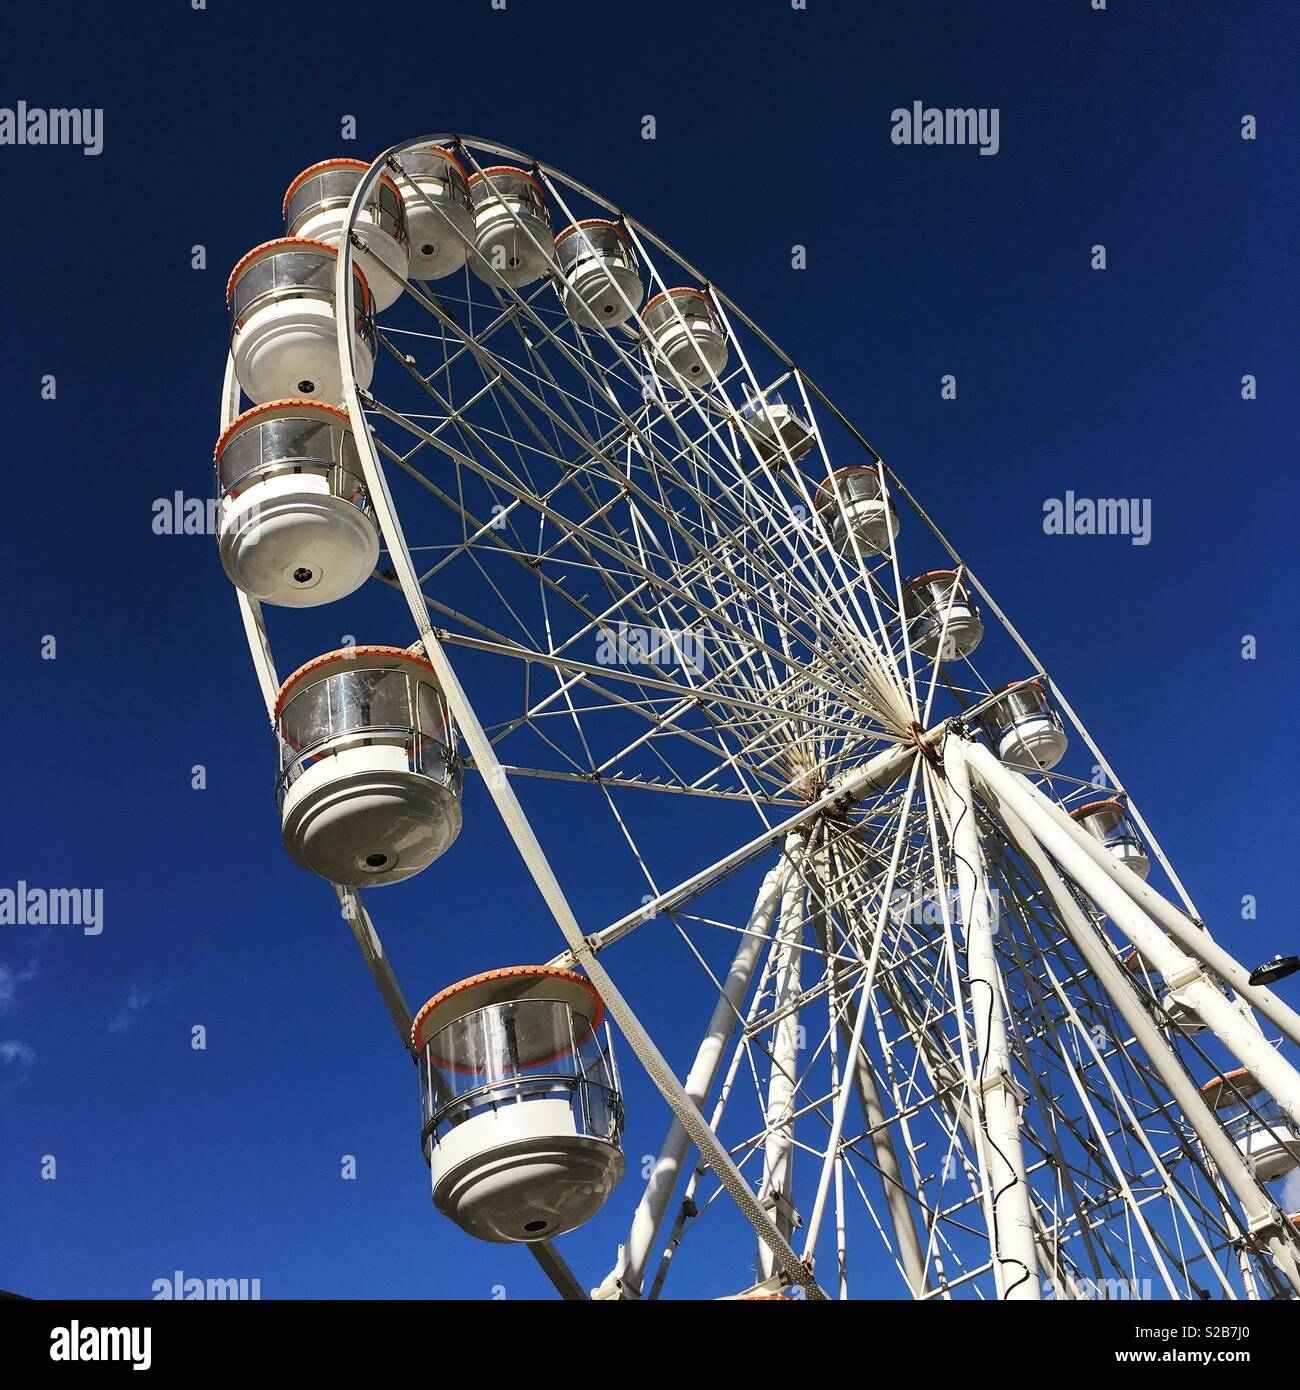 Ferris wheel in Southampton Stock Photo